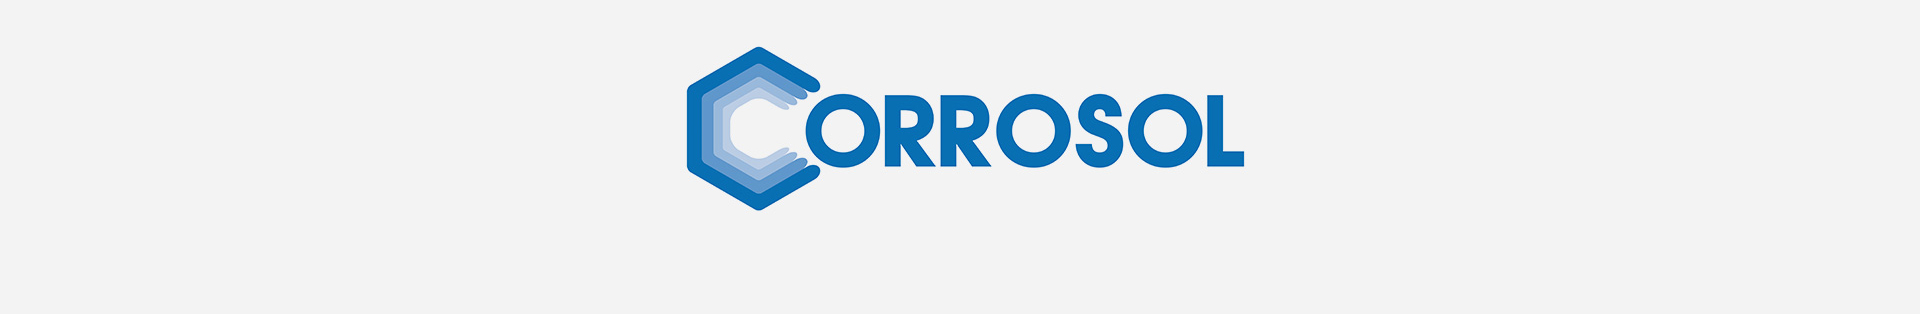 logo of corrosol factory